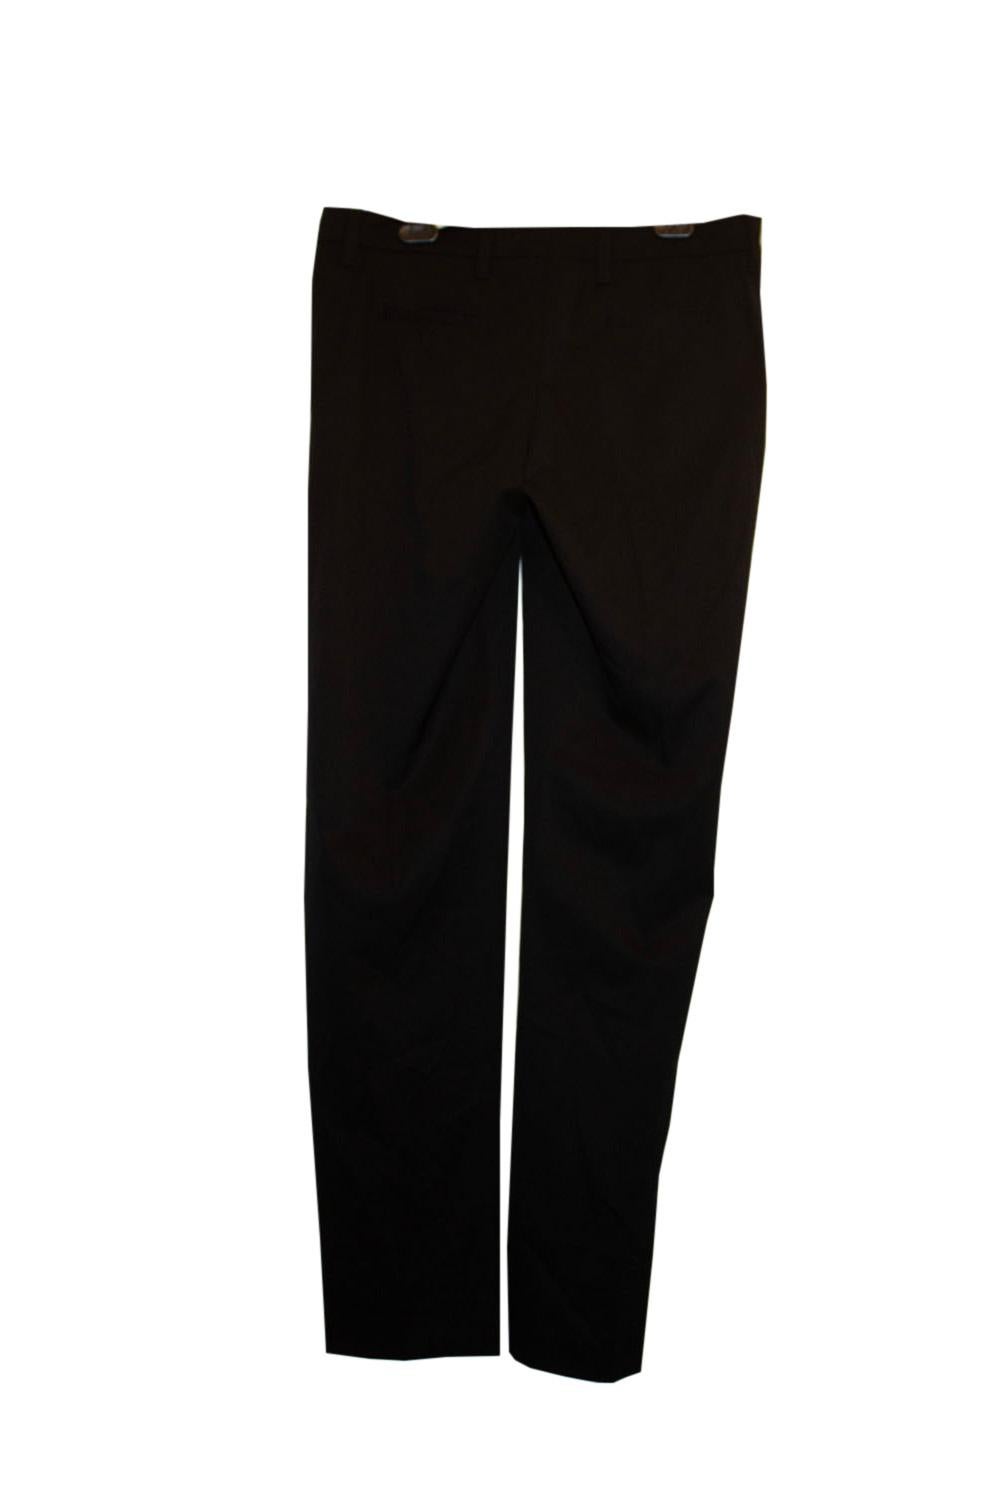 Women's or Men's Black Prada Wool Trousers / Pants For Sale